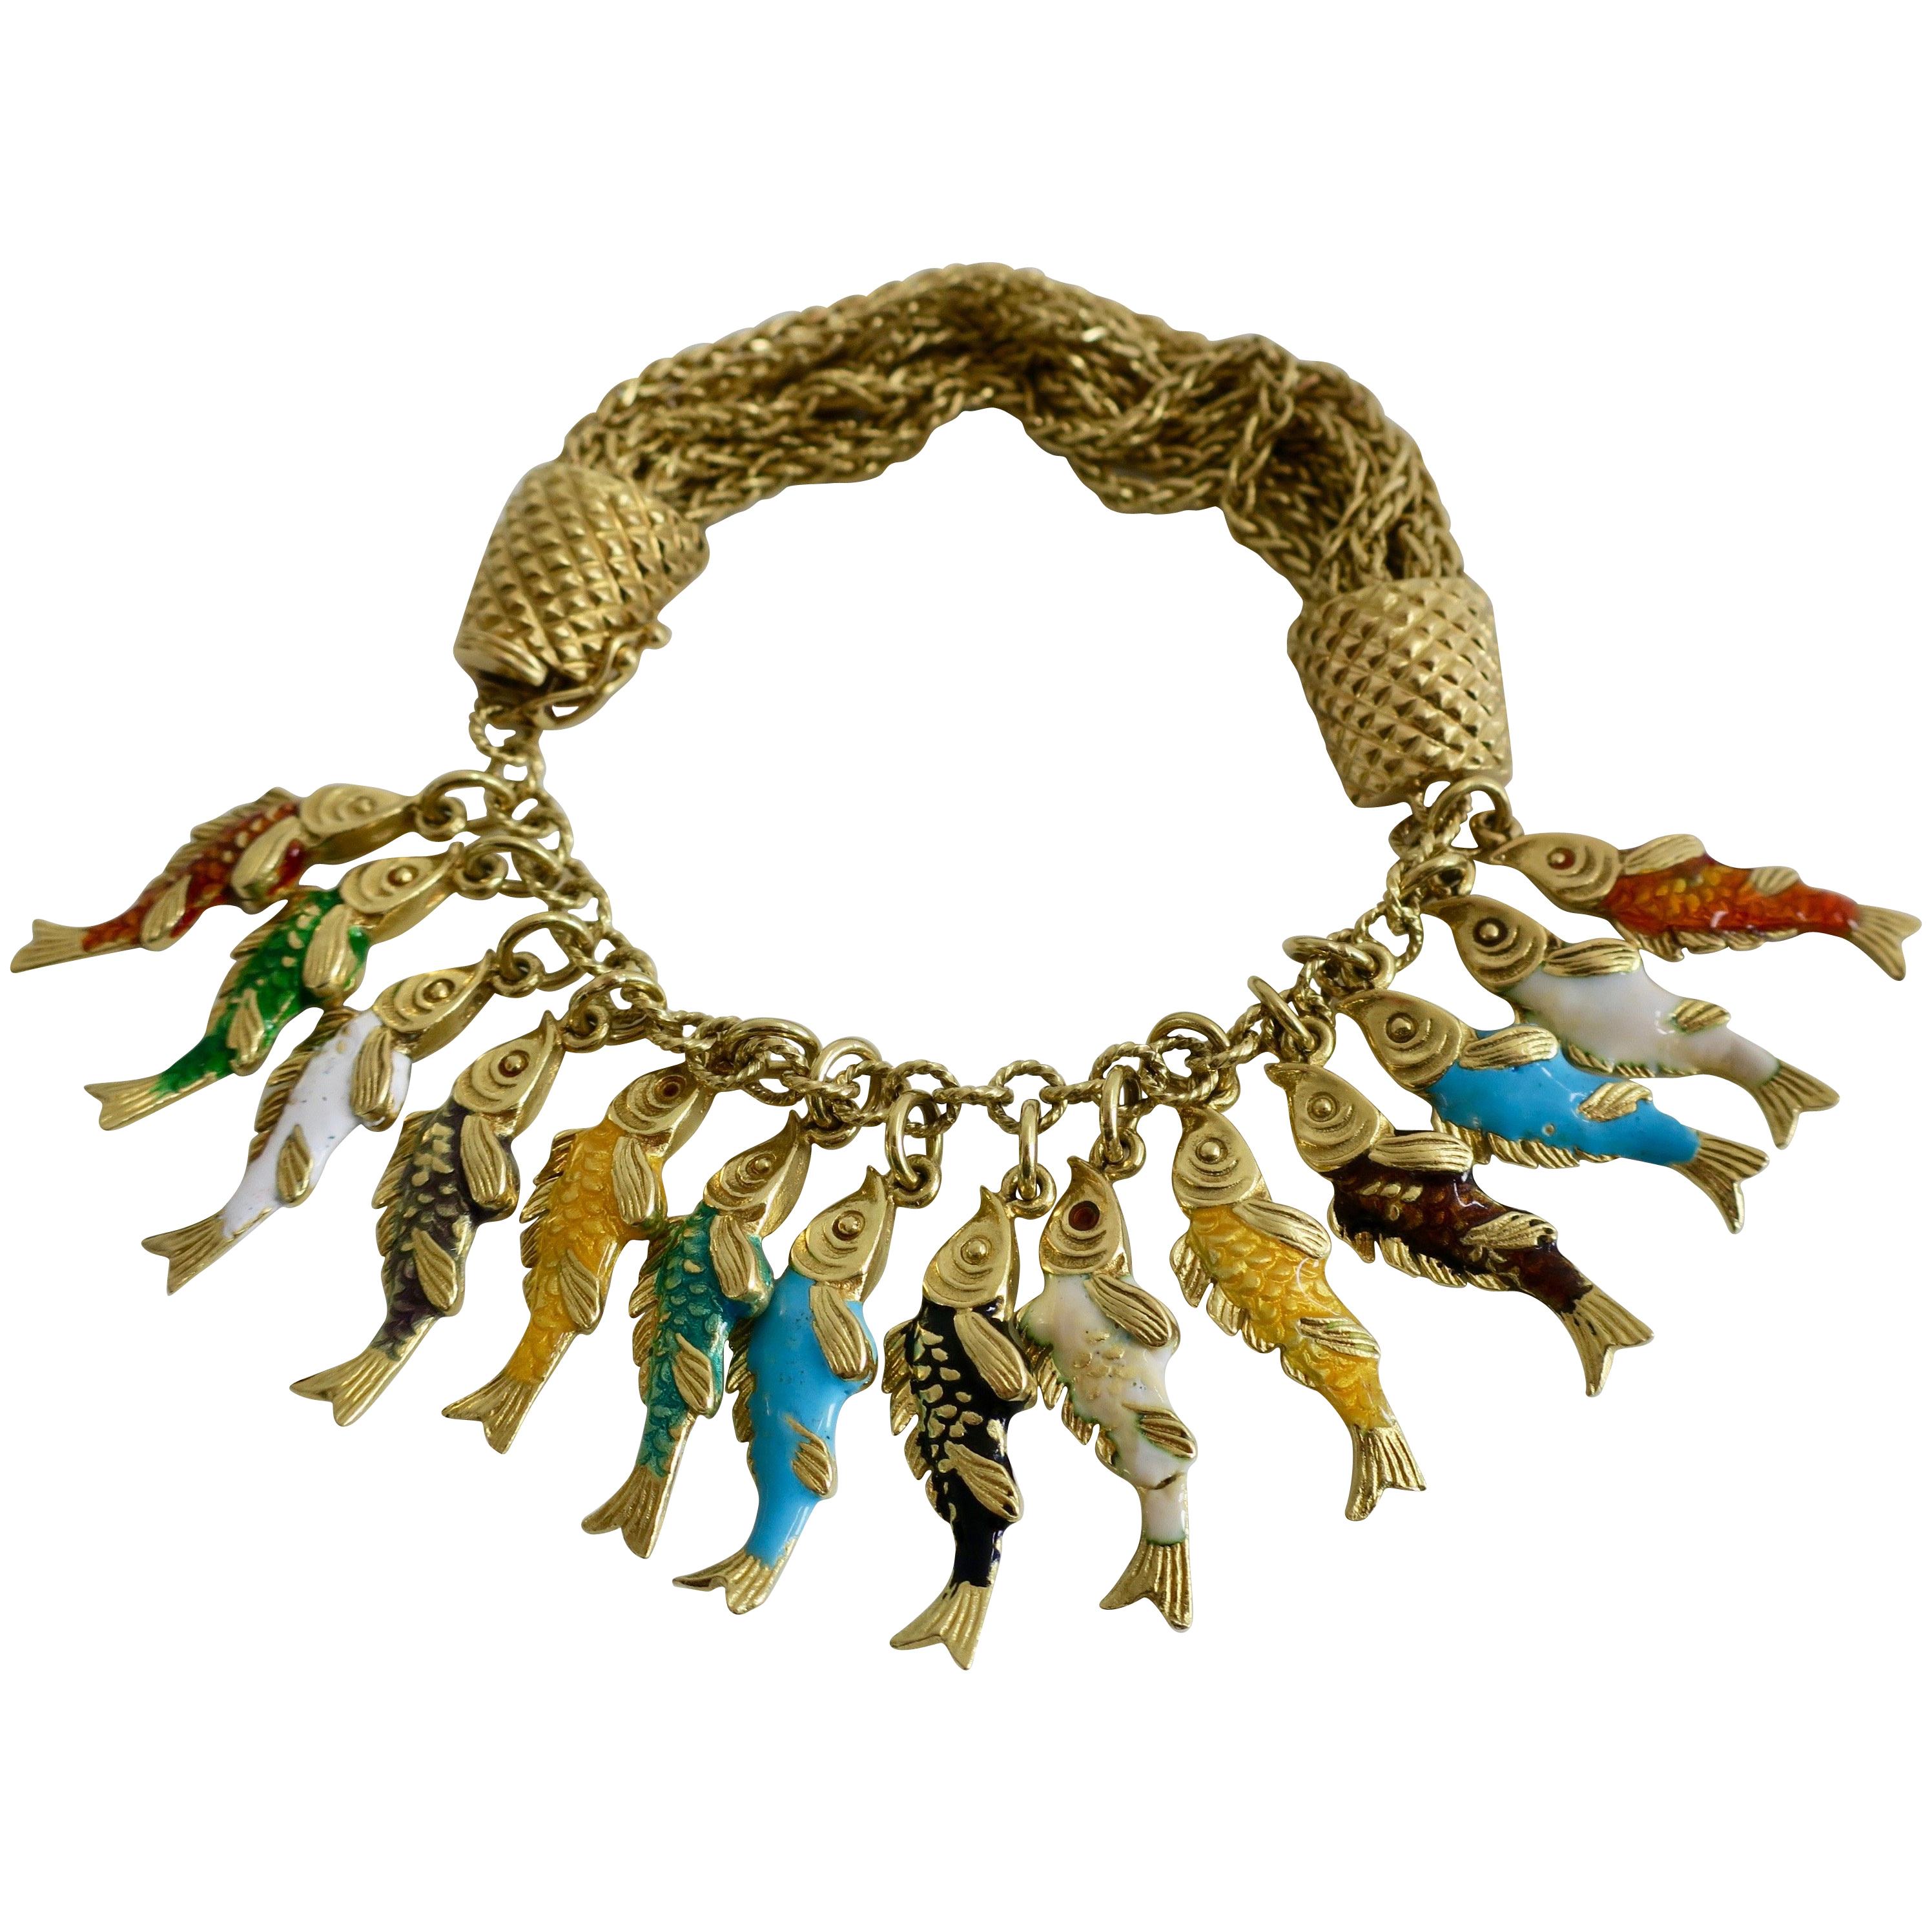 Whimsical Gold and Enamel Fish Charm Bracelet